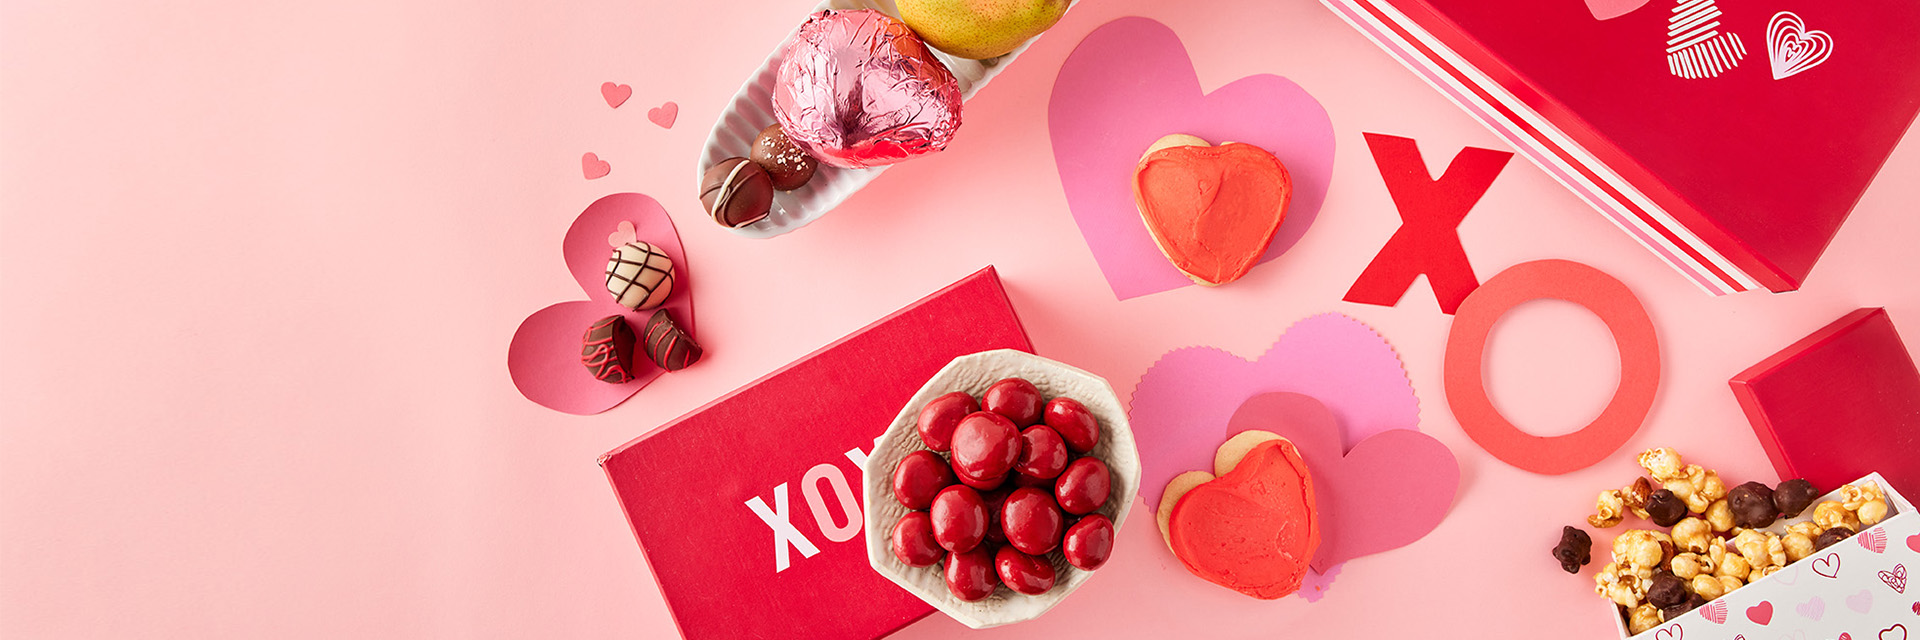 Valentine's Day Gift Arrangement Teddy Bear Baskets, Flowers  Candy/Chocolates | eBay